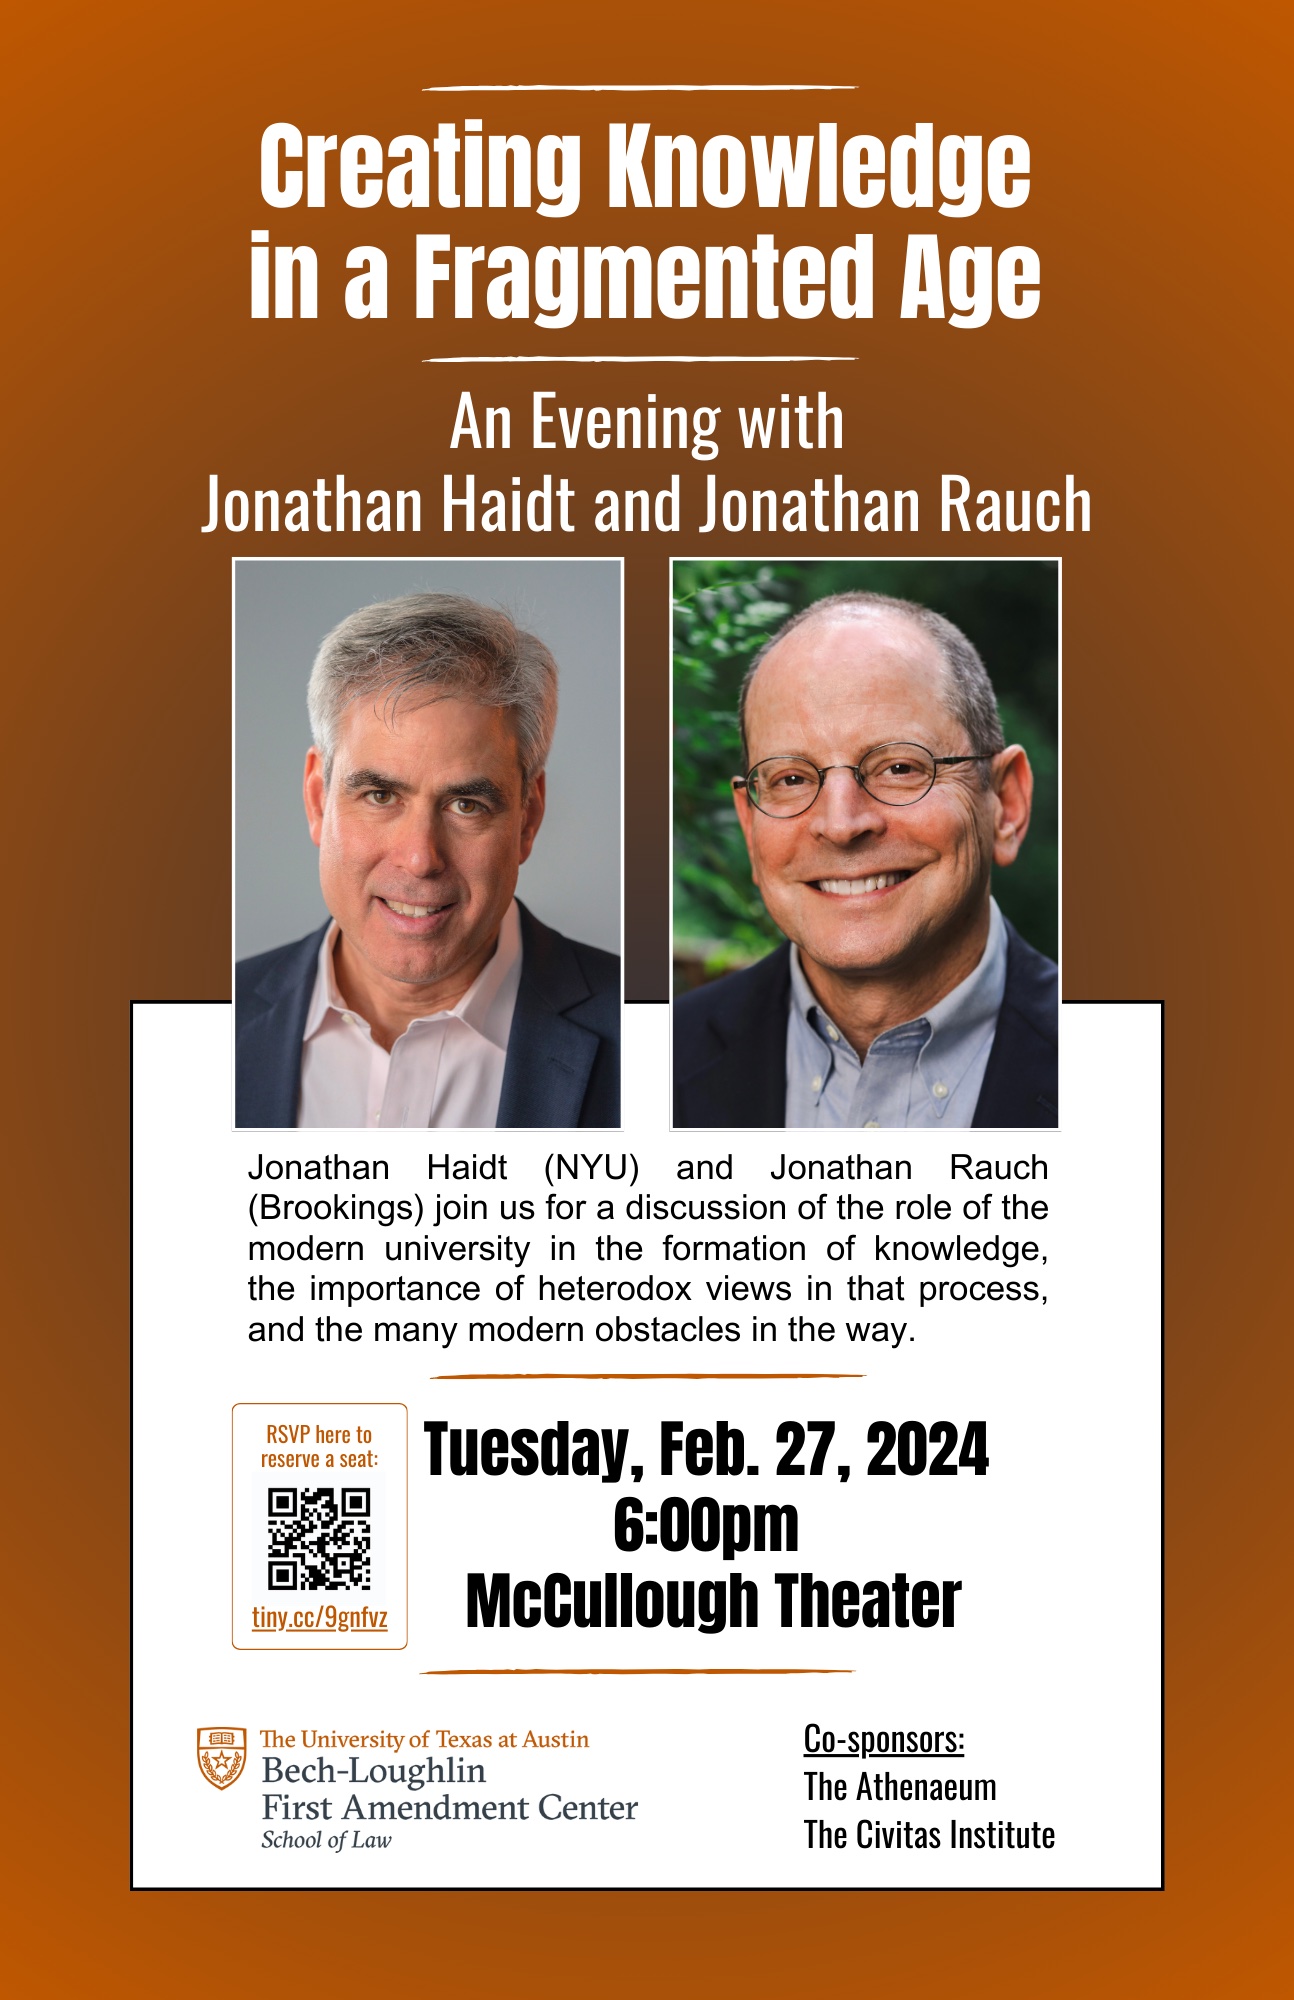 Jonathan Haidt and Jonathan Rauch